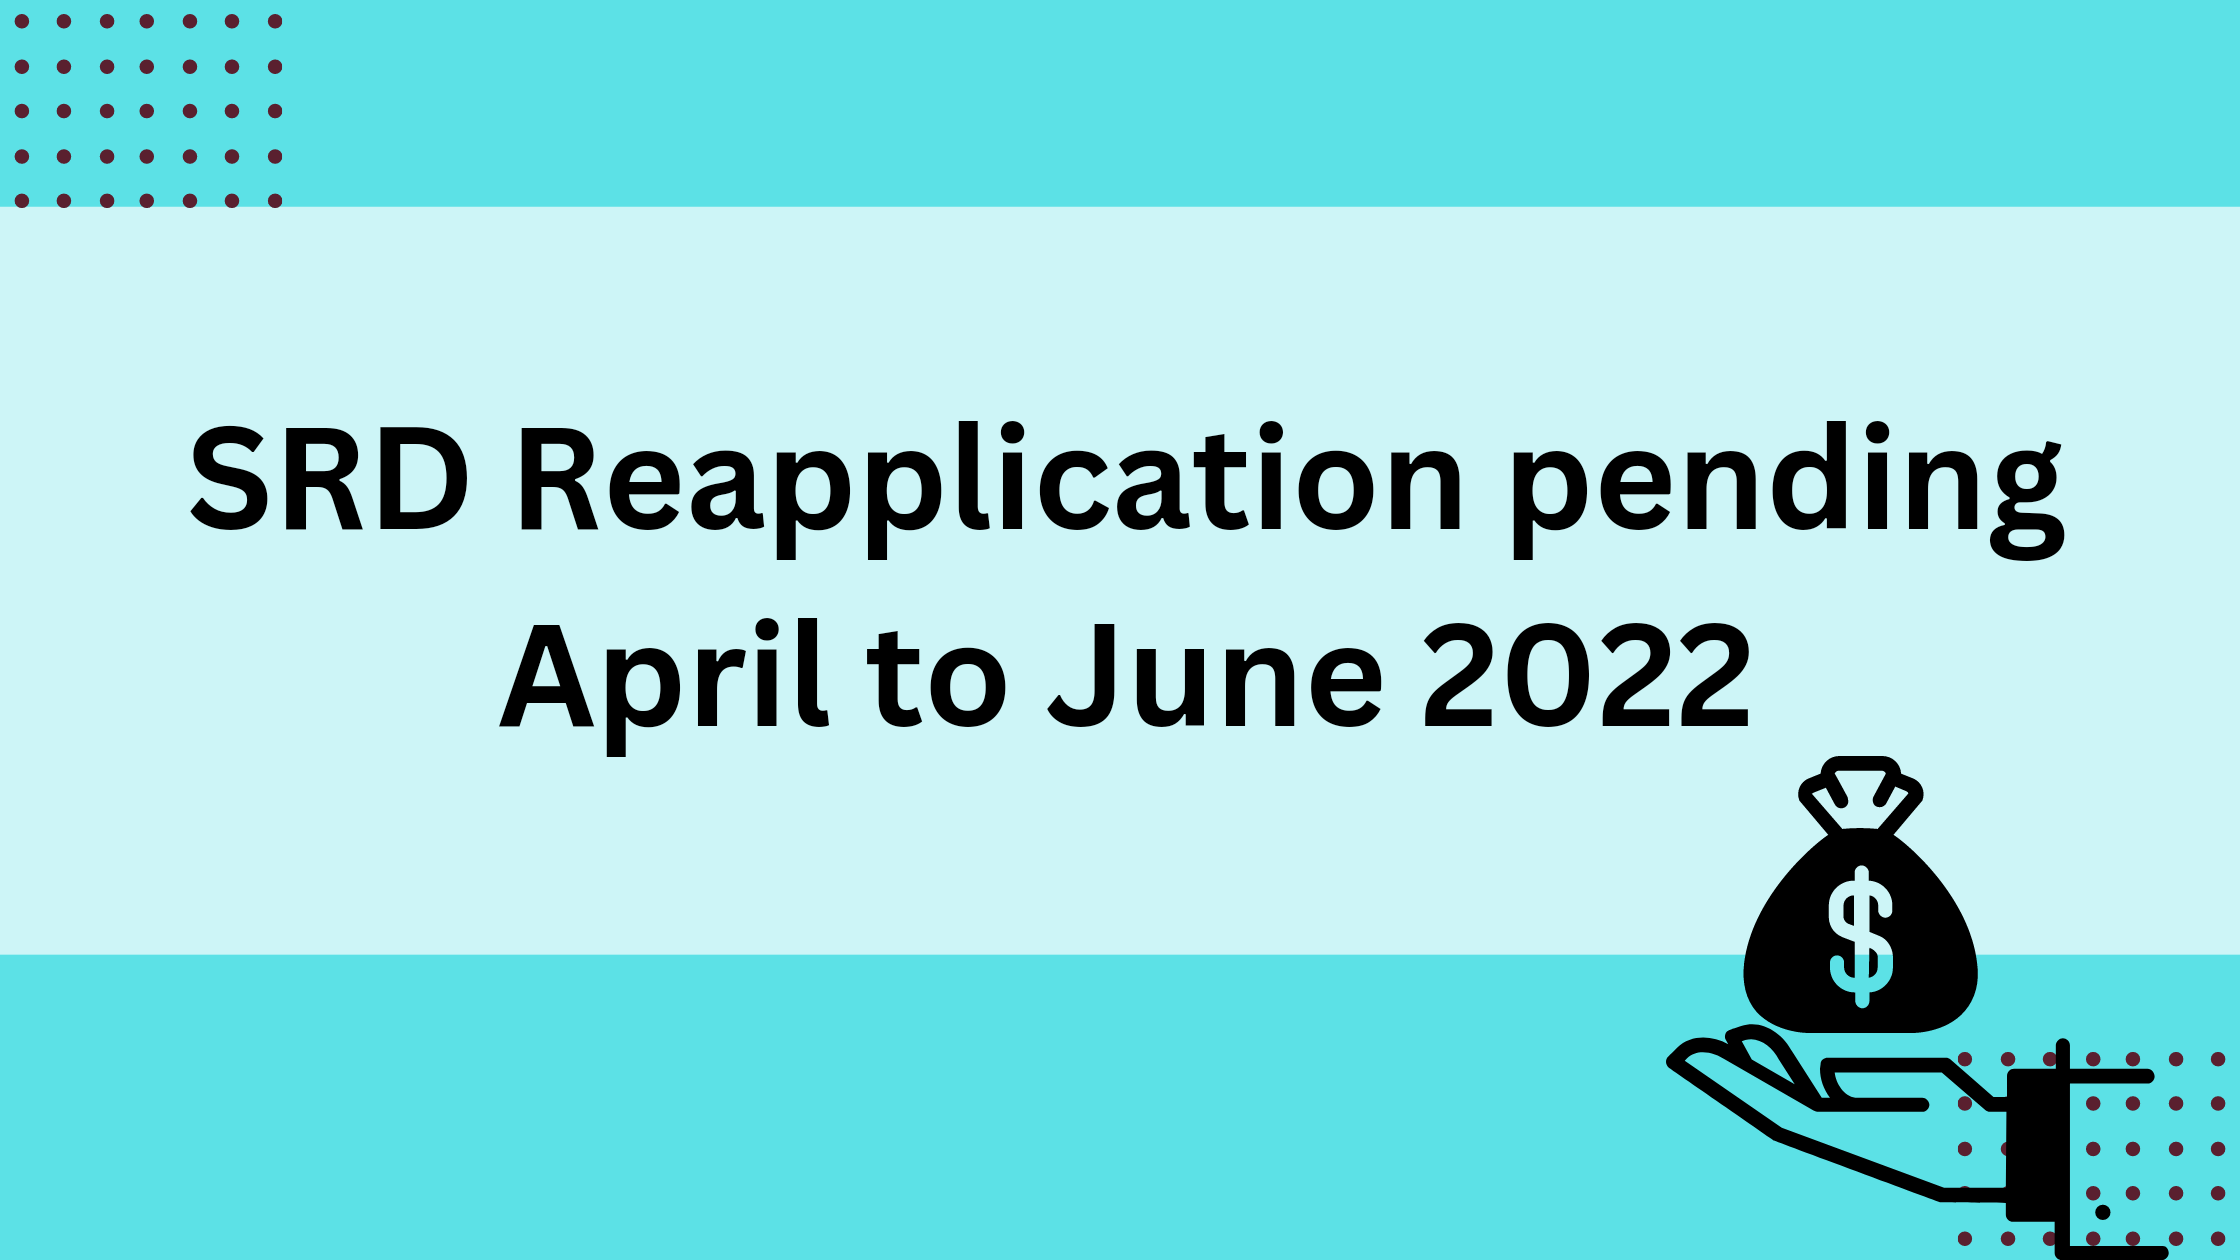 SRD Reapplication pending April to June 2022